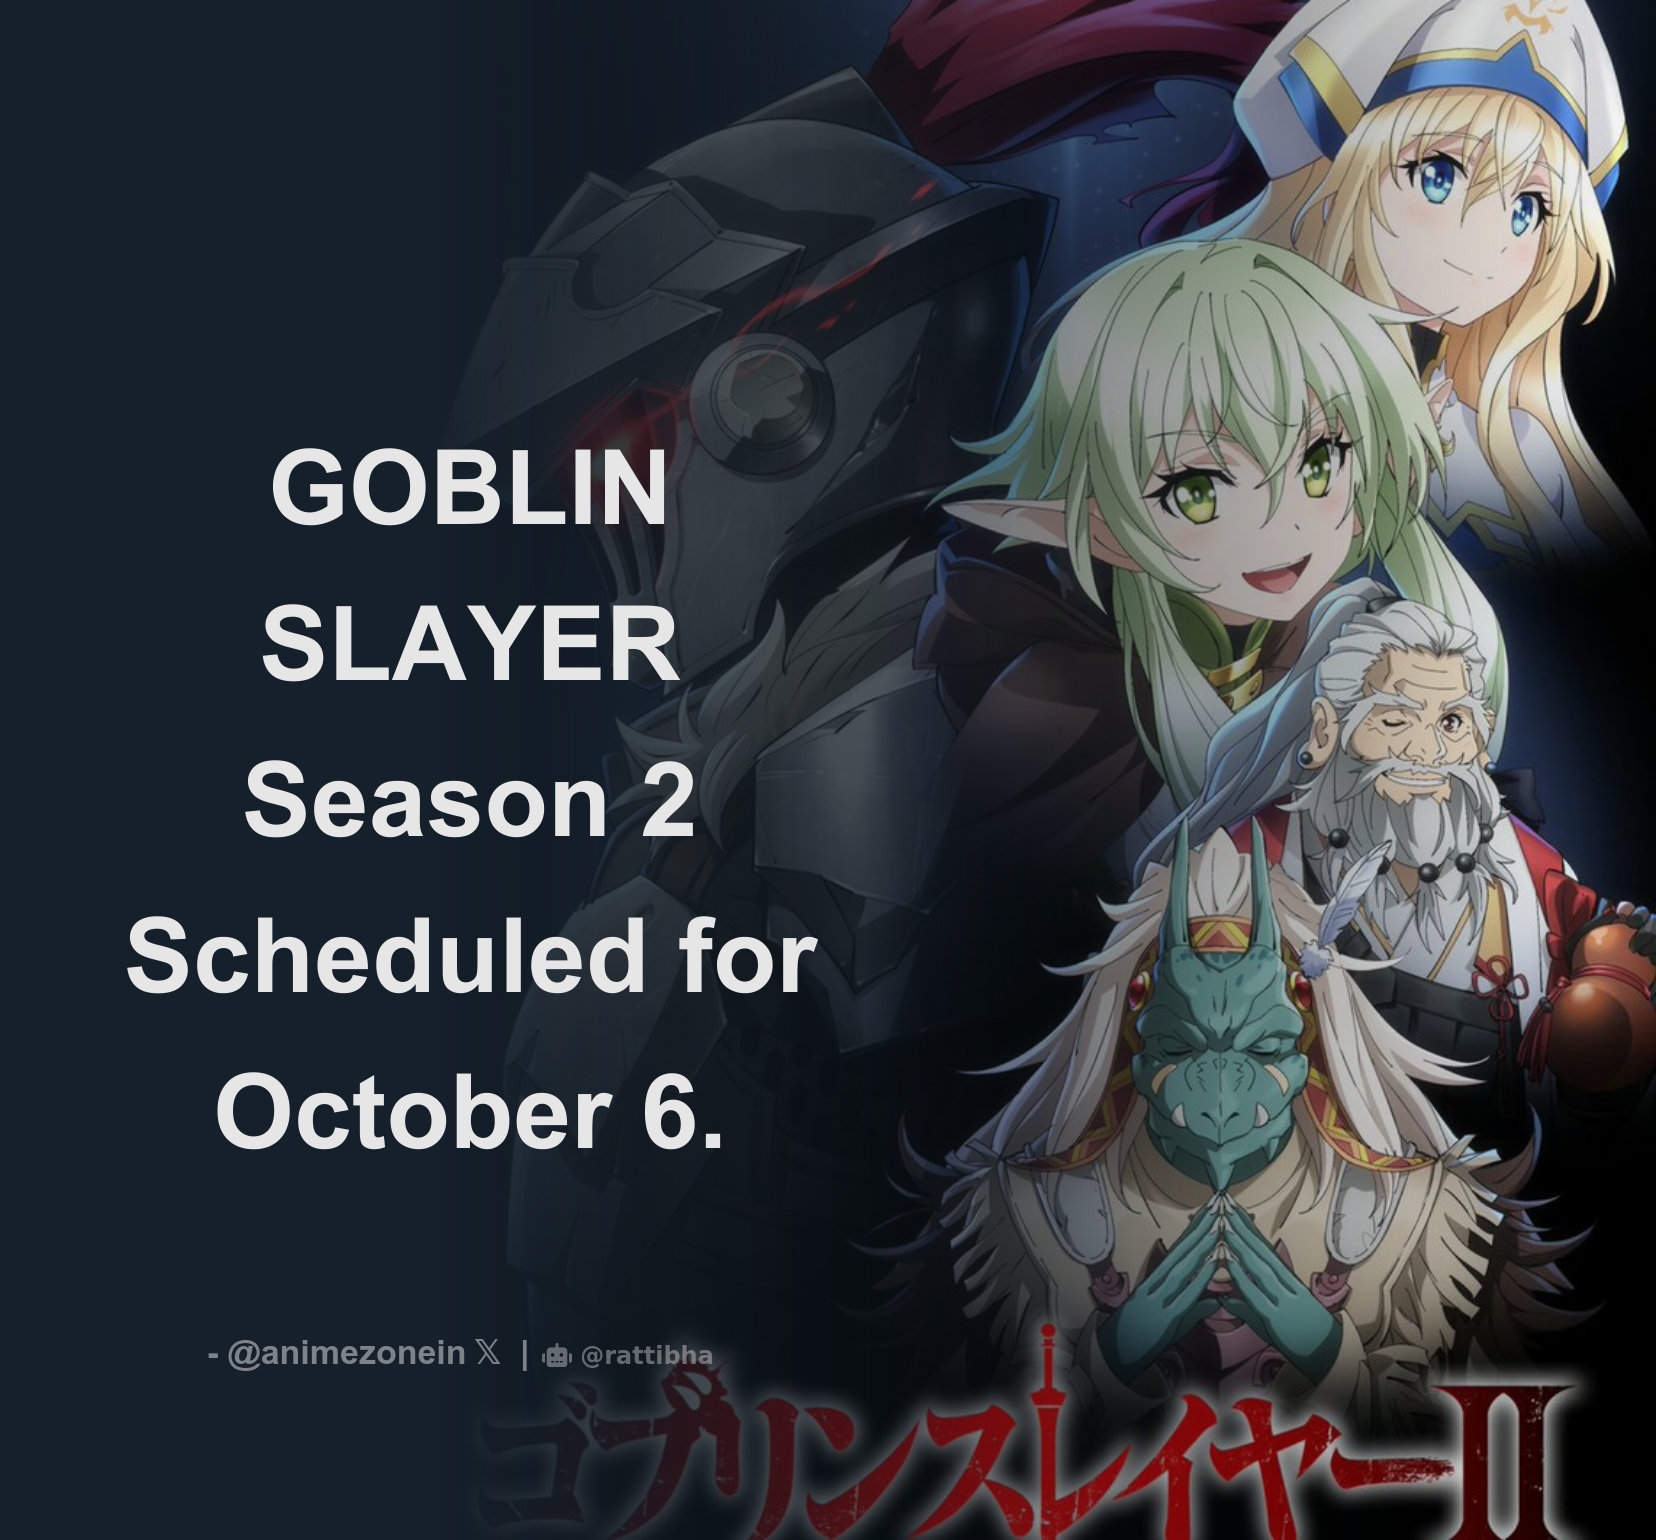 Goblin Slayer season 2 release schedule: Goblin Slayer season 2